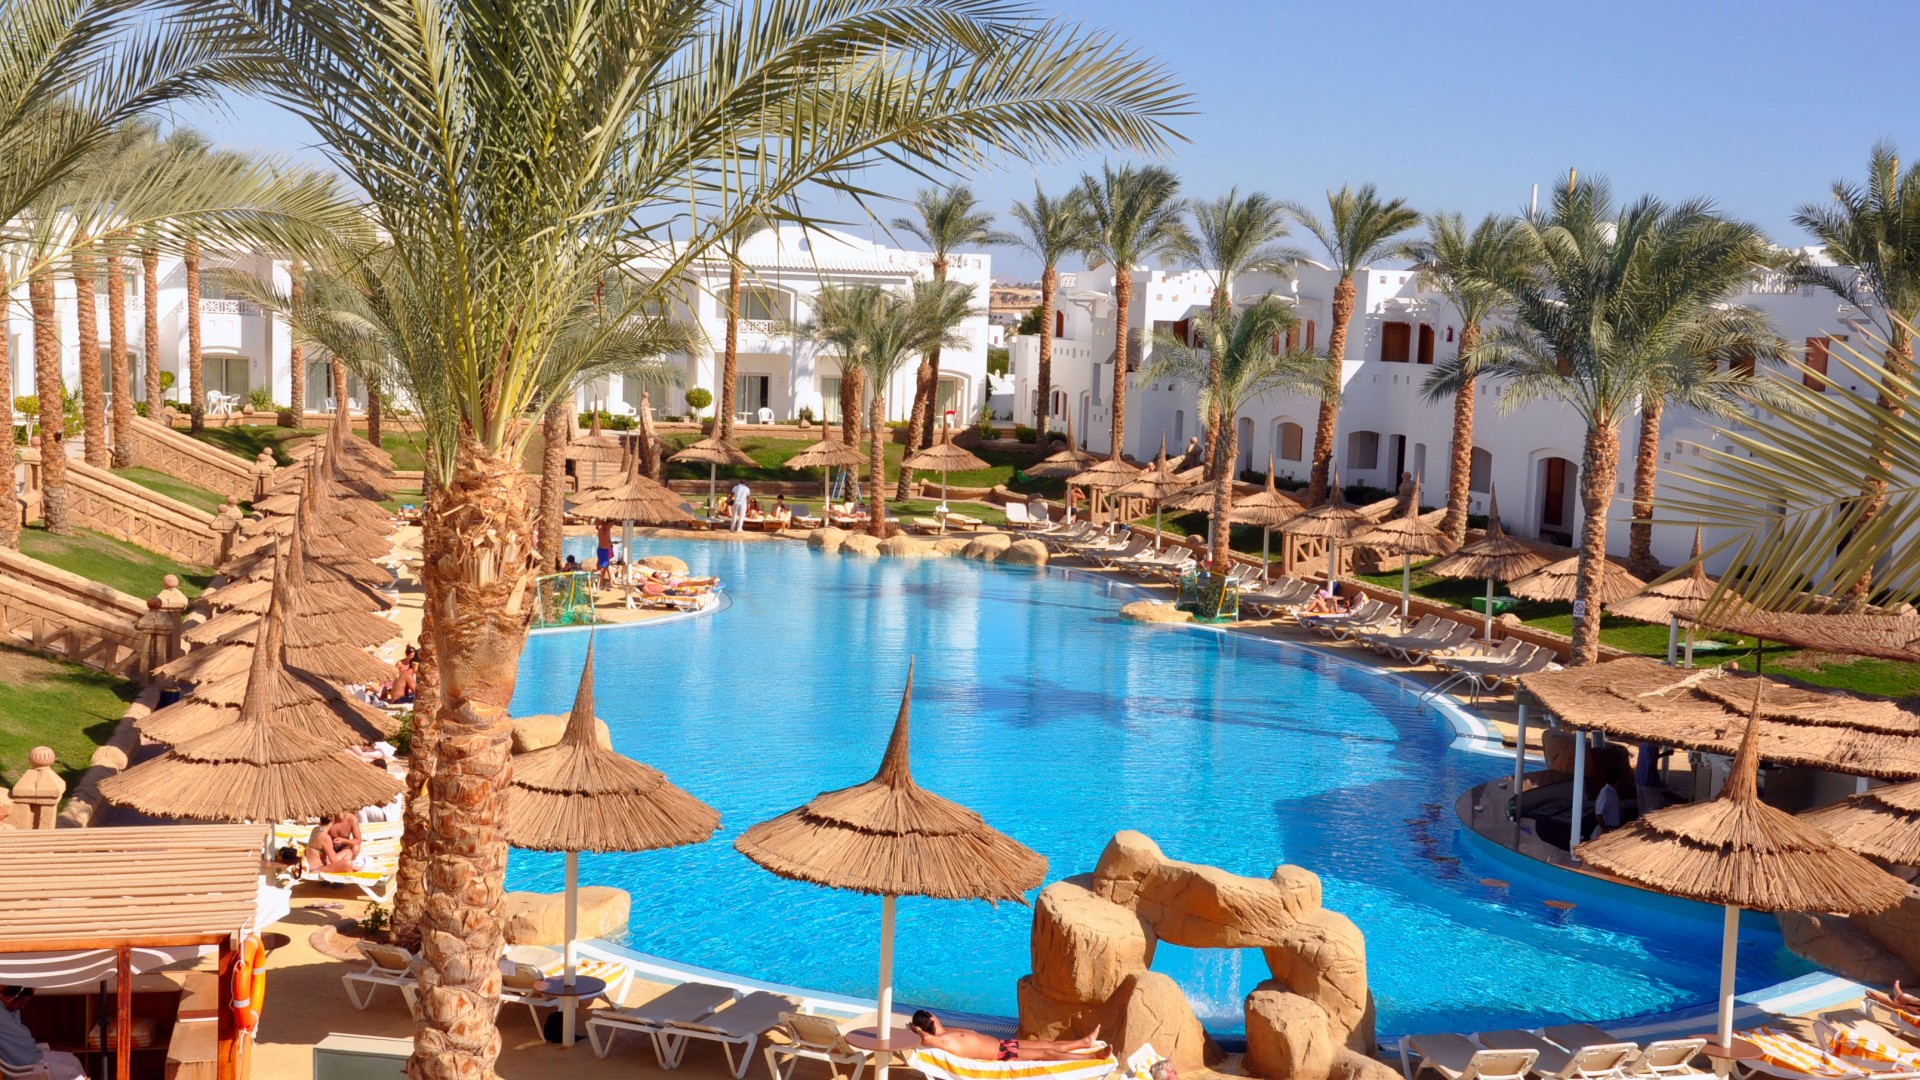 Tropicana Rosetta & Jasmine Club, Best Hotels of 2017, tourism, travel, resort, vacation, pool, palms, sunbed (horizontal)